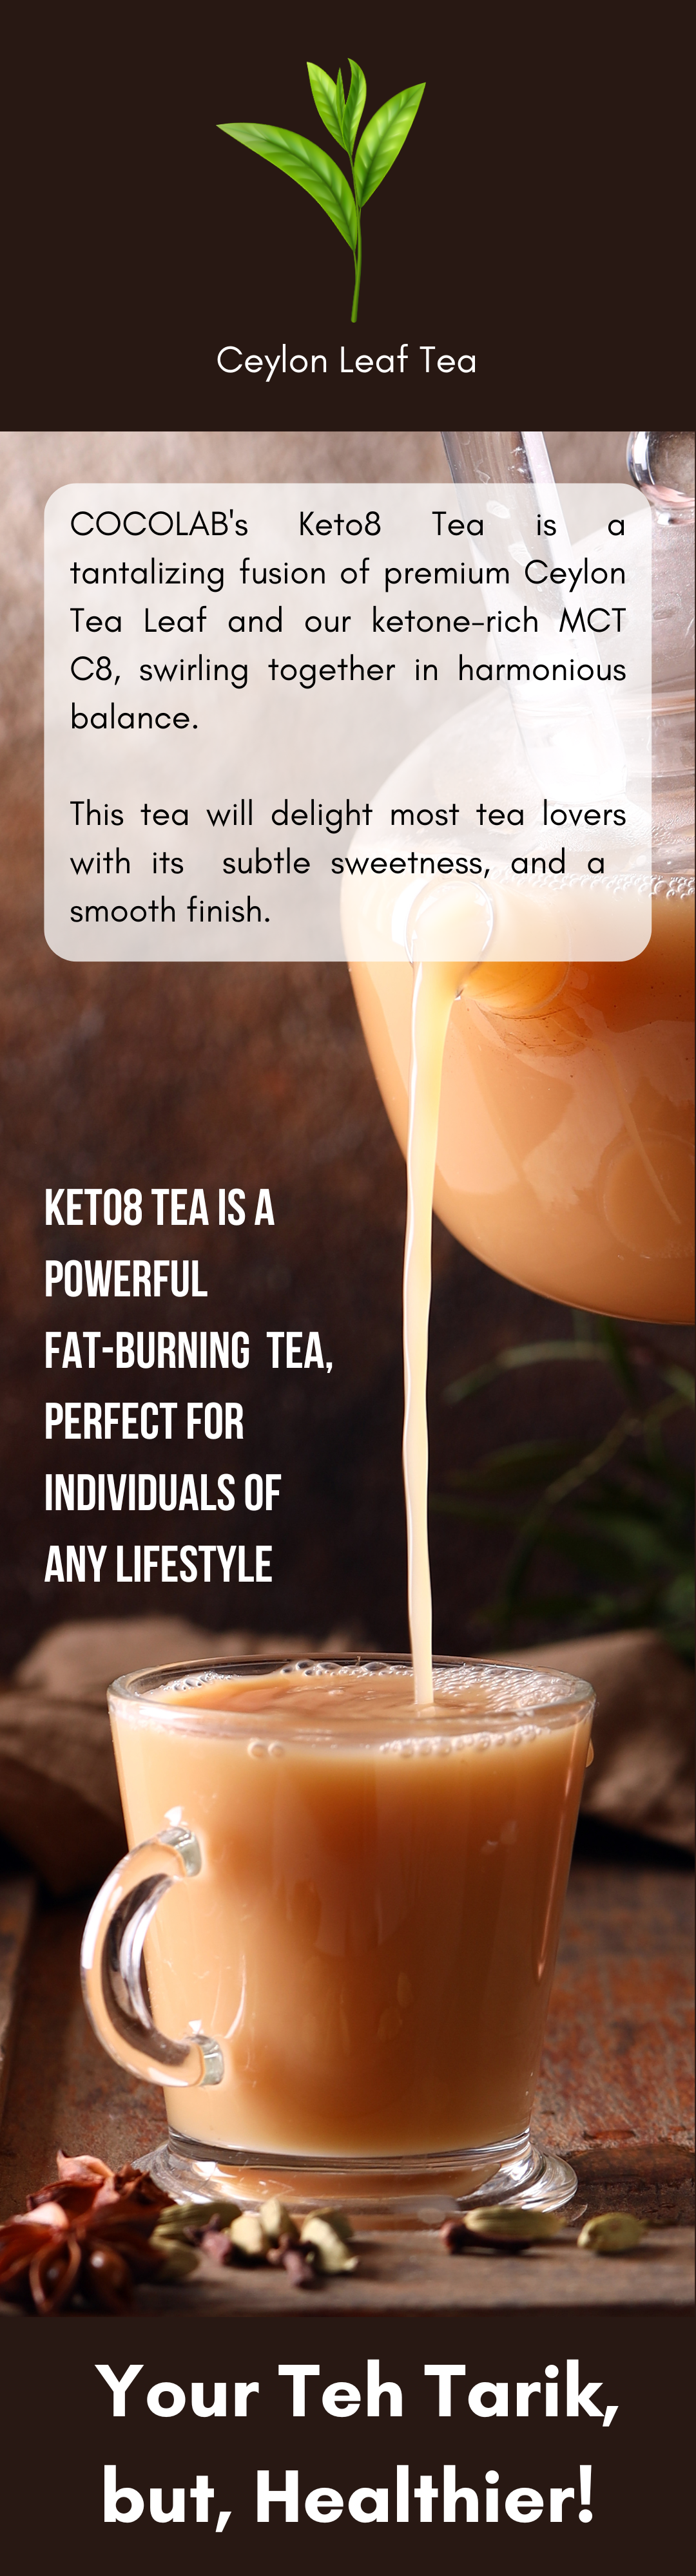 Keto8 Tea Infographic 2